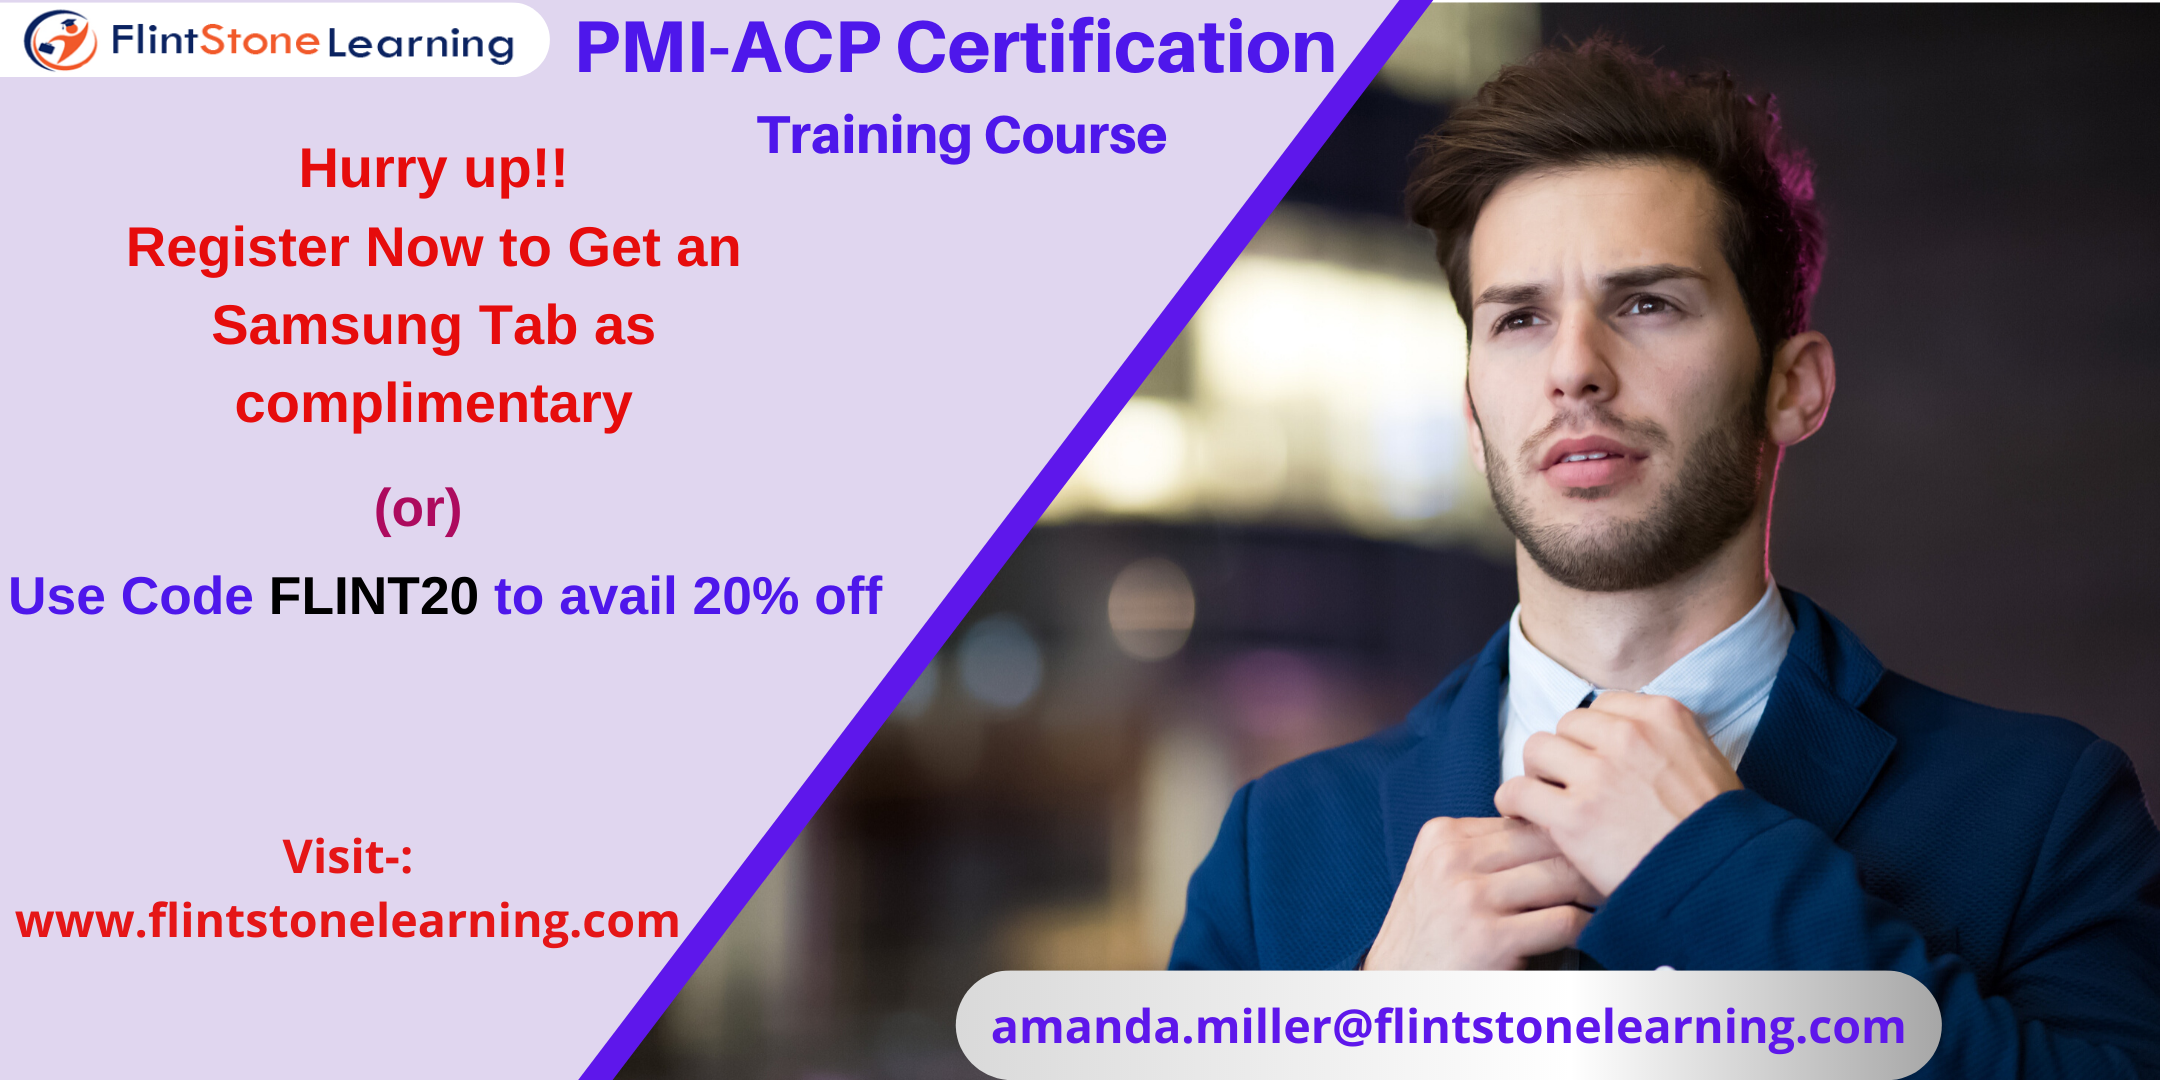 PMI-ACP Certification Training Course in Burbank, CA